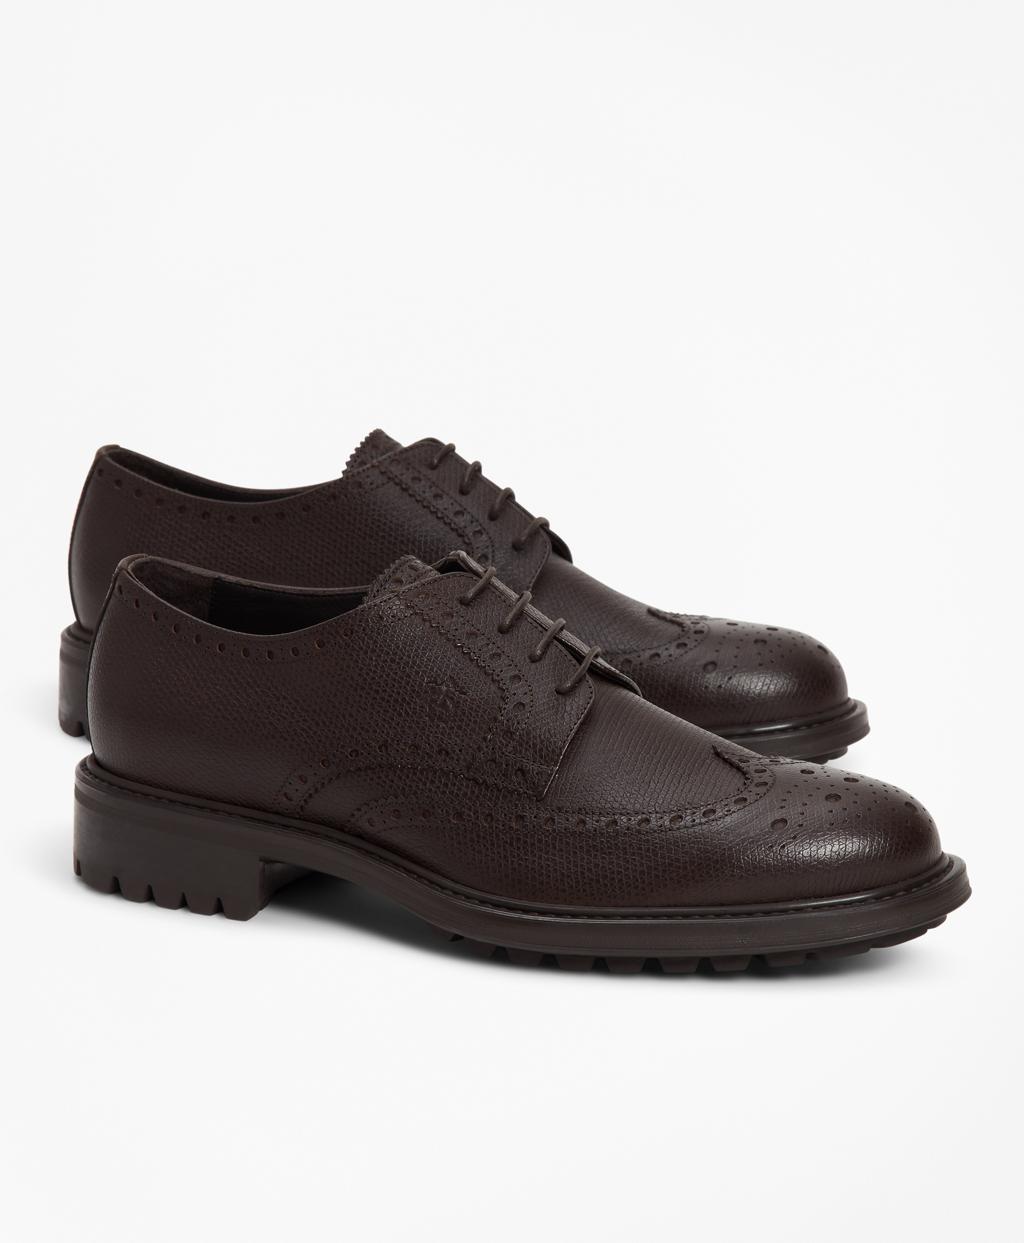 Brooks Brothers 1818 Footwear Suede Wingtips in Brown for Men - Lyst